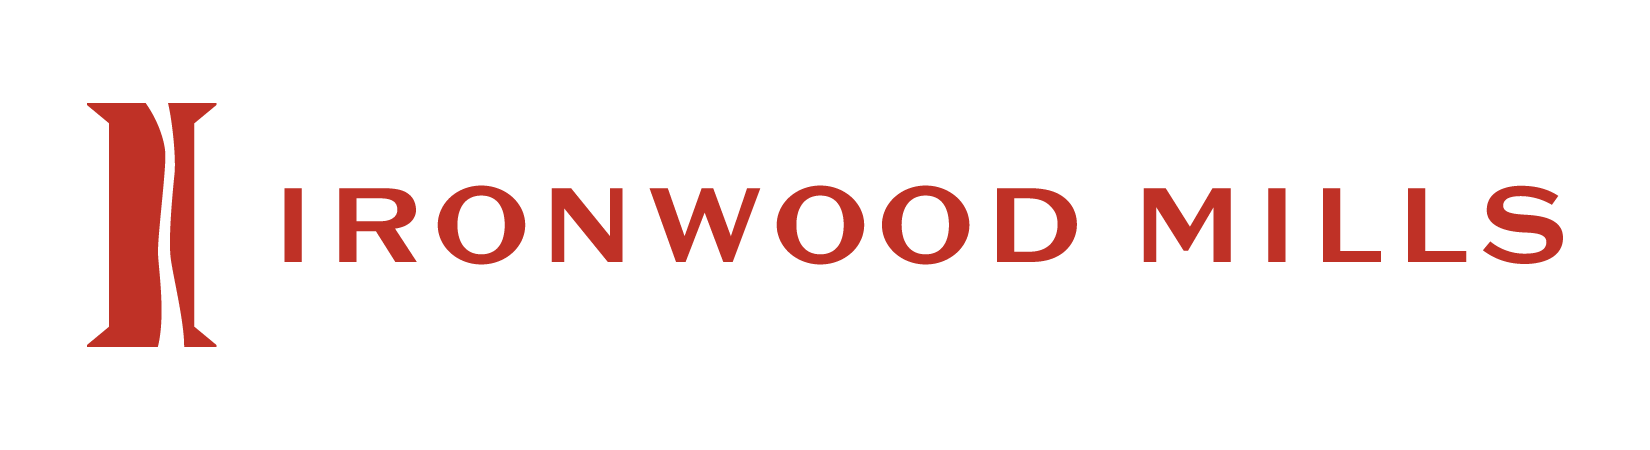 Ironwood Mills Primary Logo - Unimog